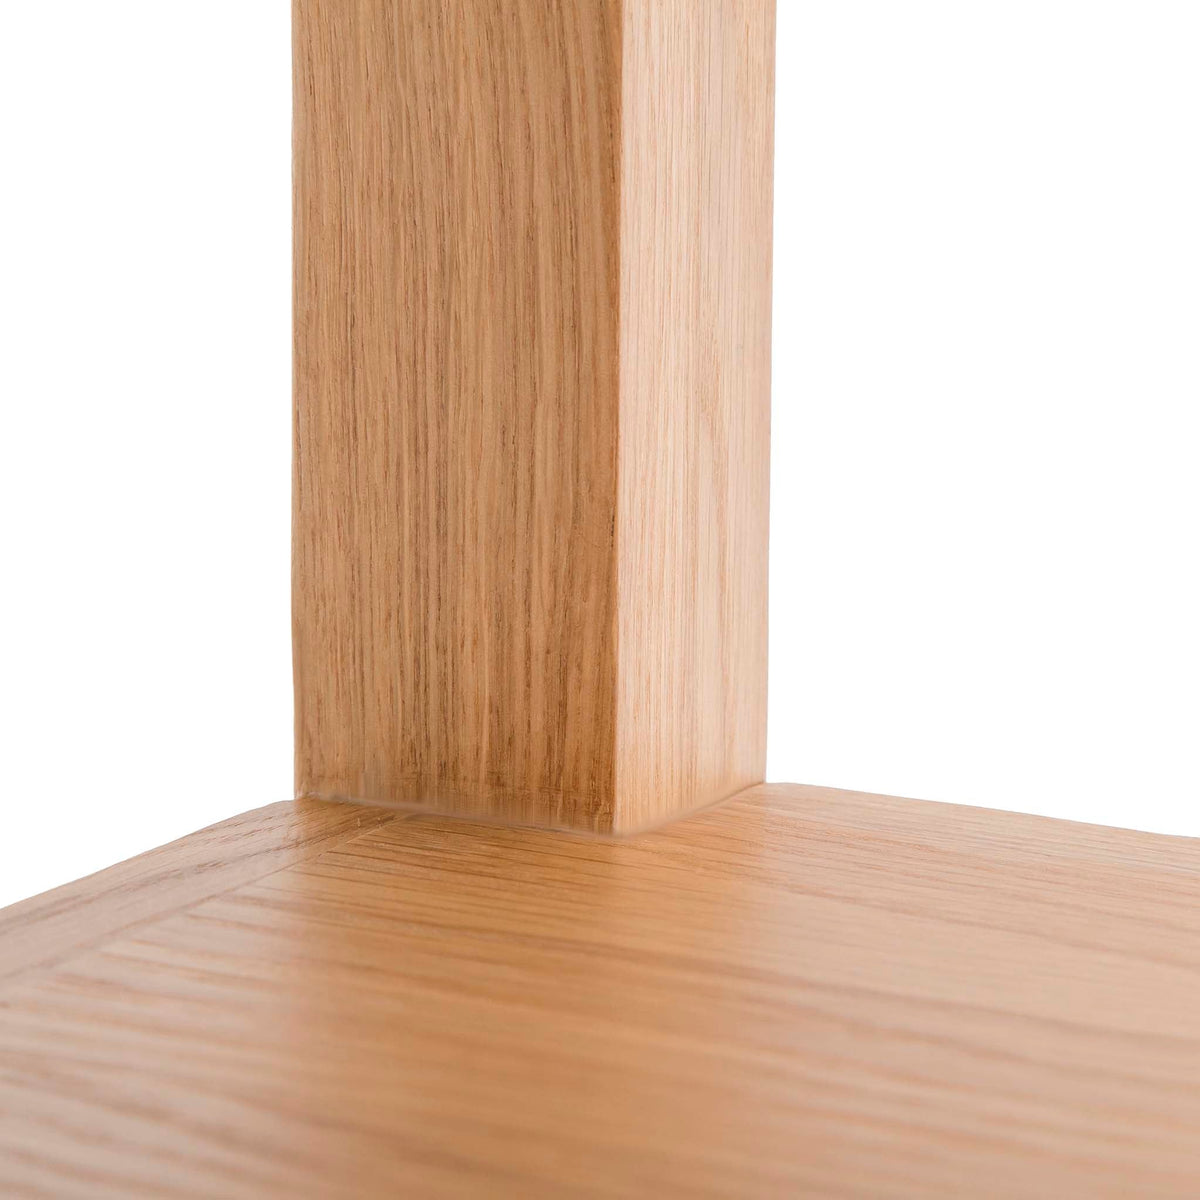 Abbey Light Oak Lamp Table - Close up of lower shelf